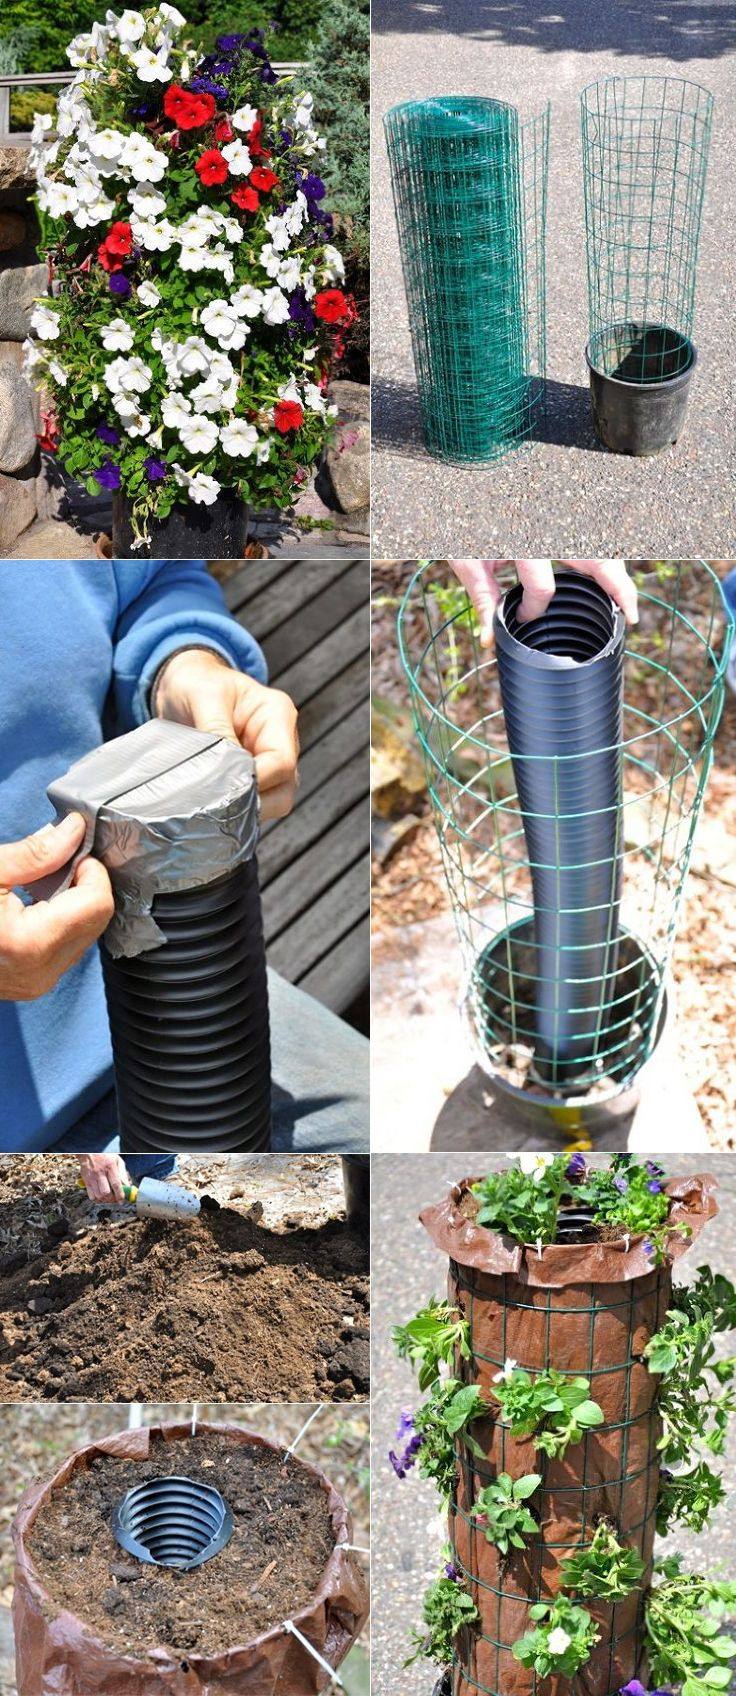 Best ideas about Garden Tower DIY
. Save or Pin Best 25 Flower tower ideas on Pinterest Now.